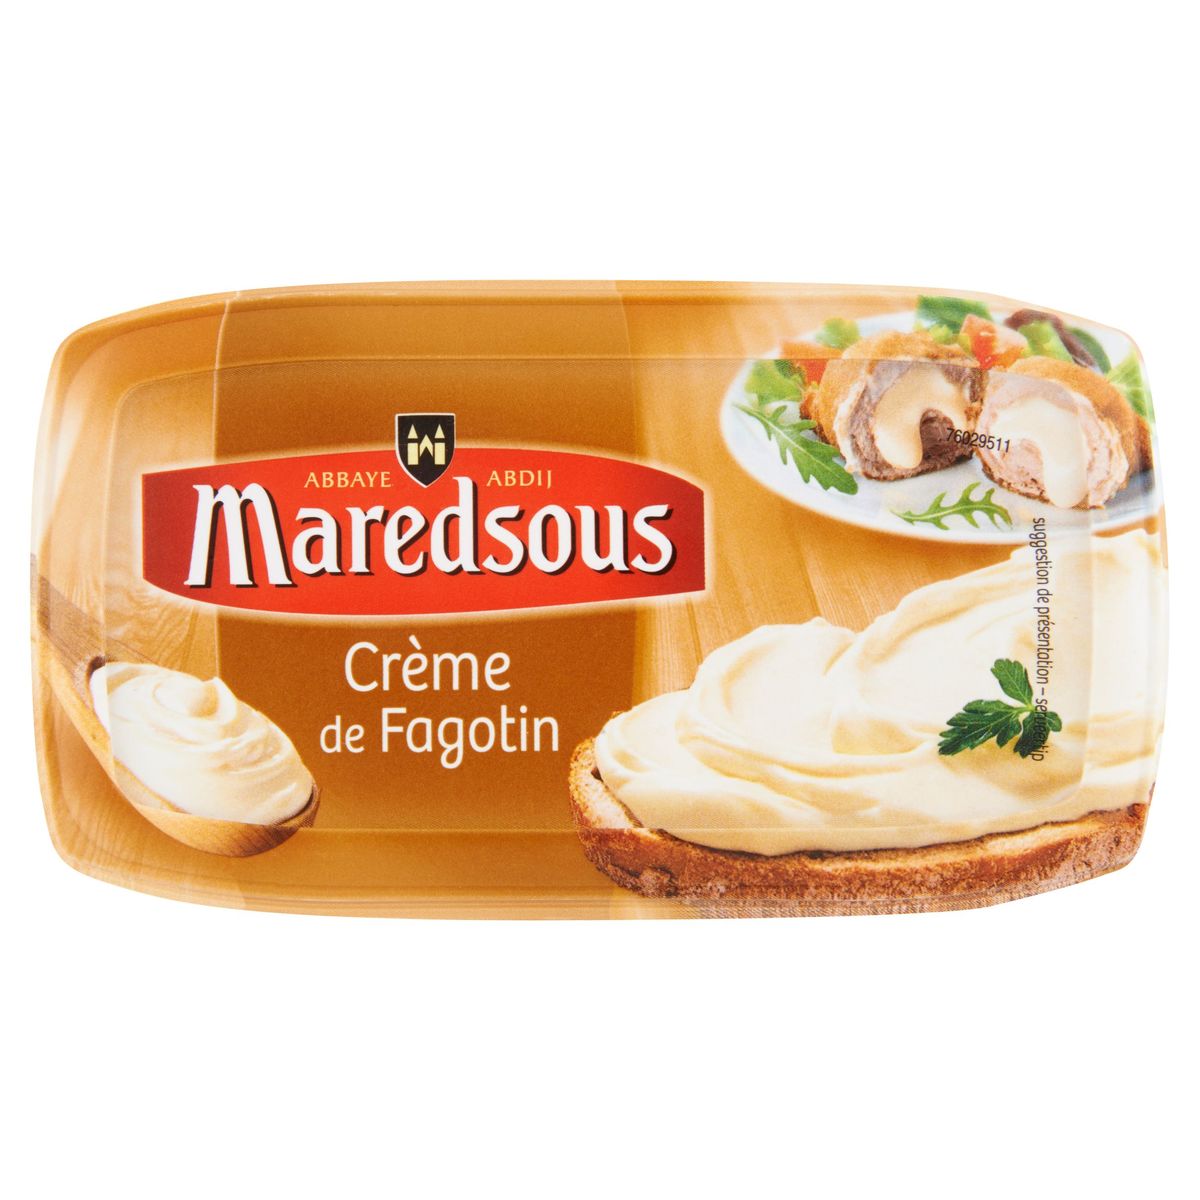 Maredsous Smeerkaas Crème de Fagotin 200 g